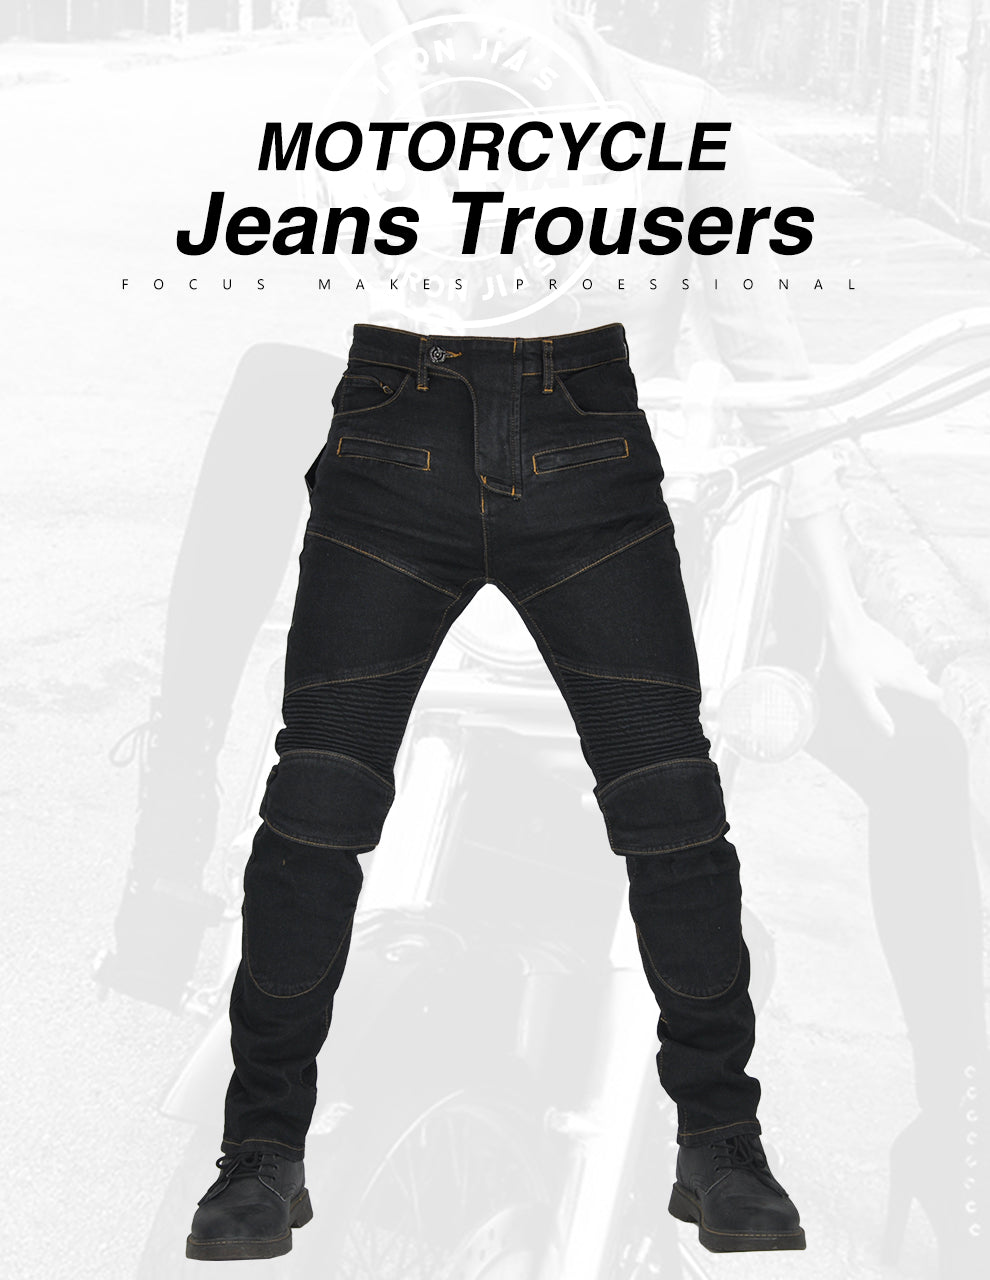 FER JIA'S Hommes Pantalon MotoCross MotoCrock Tapis de protection avec span + Tampons genoux Protection Moto Riding Jeans Pantalons